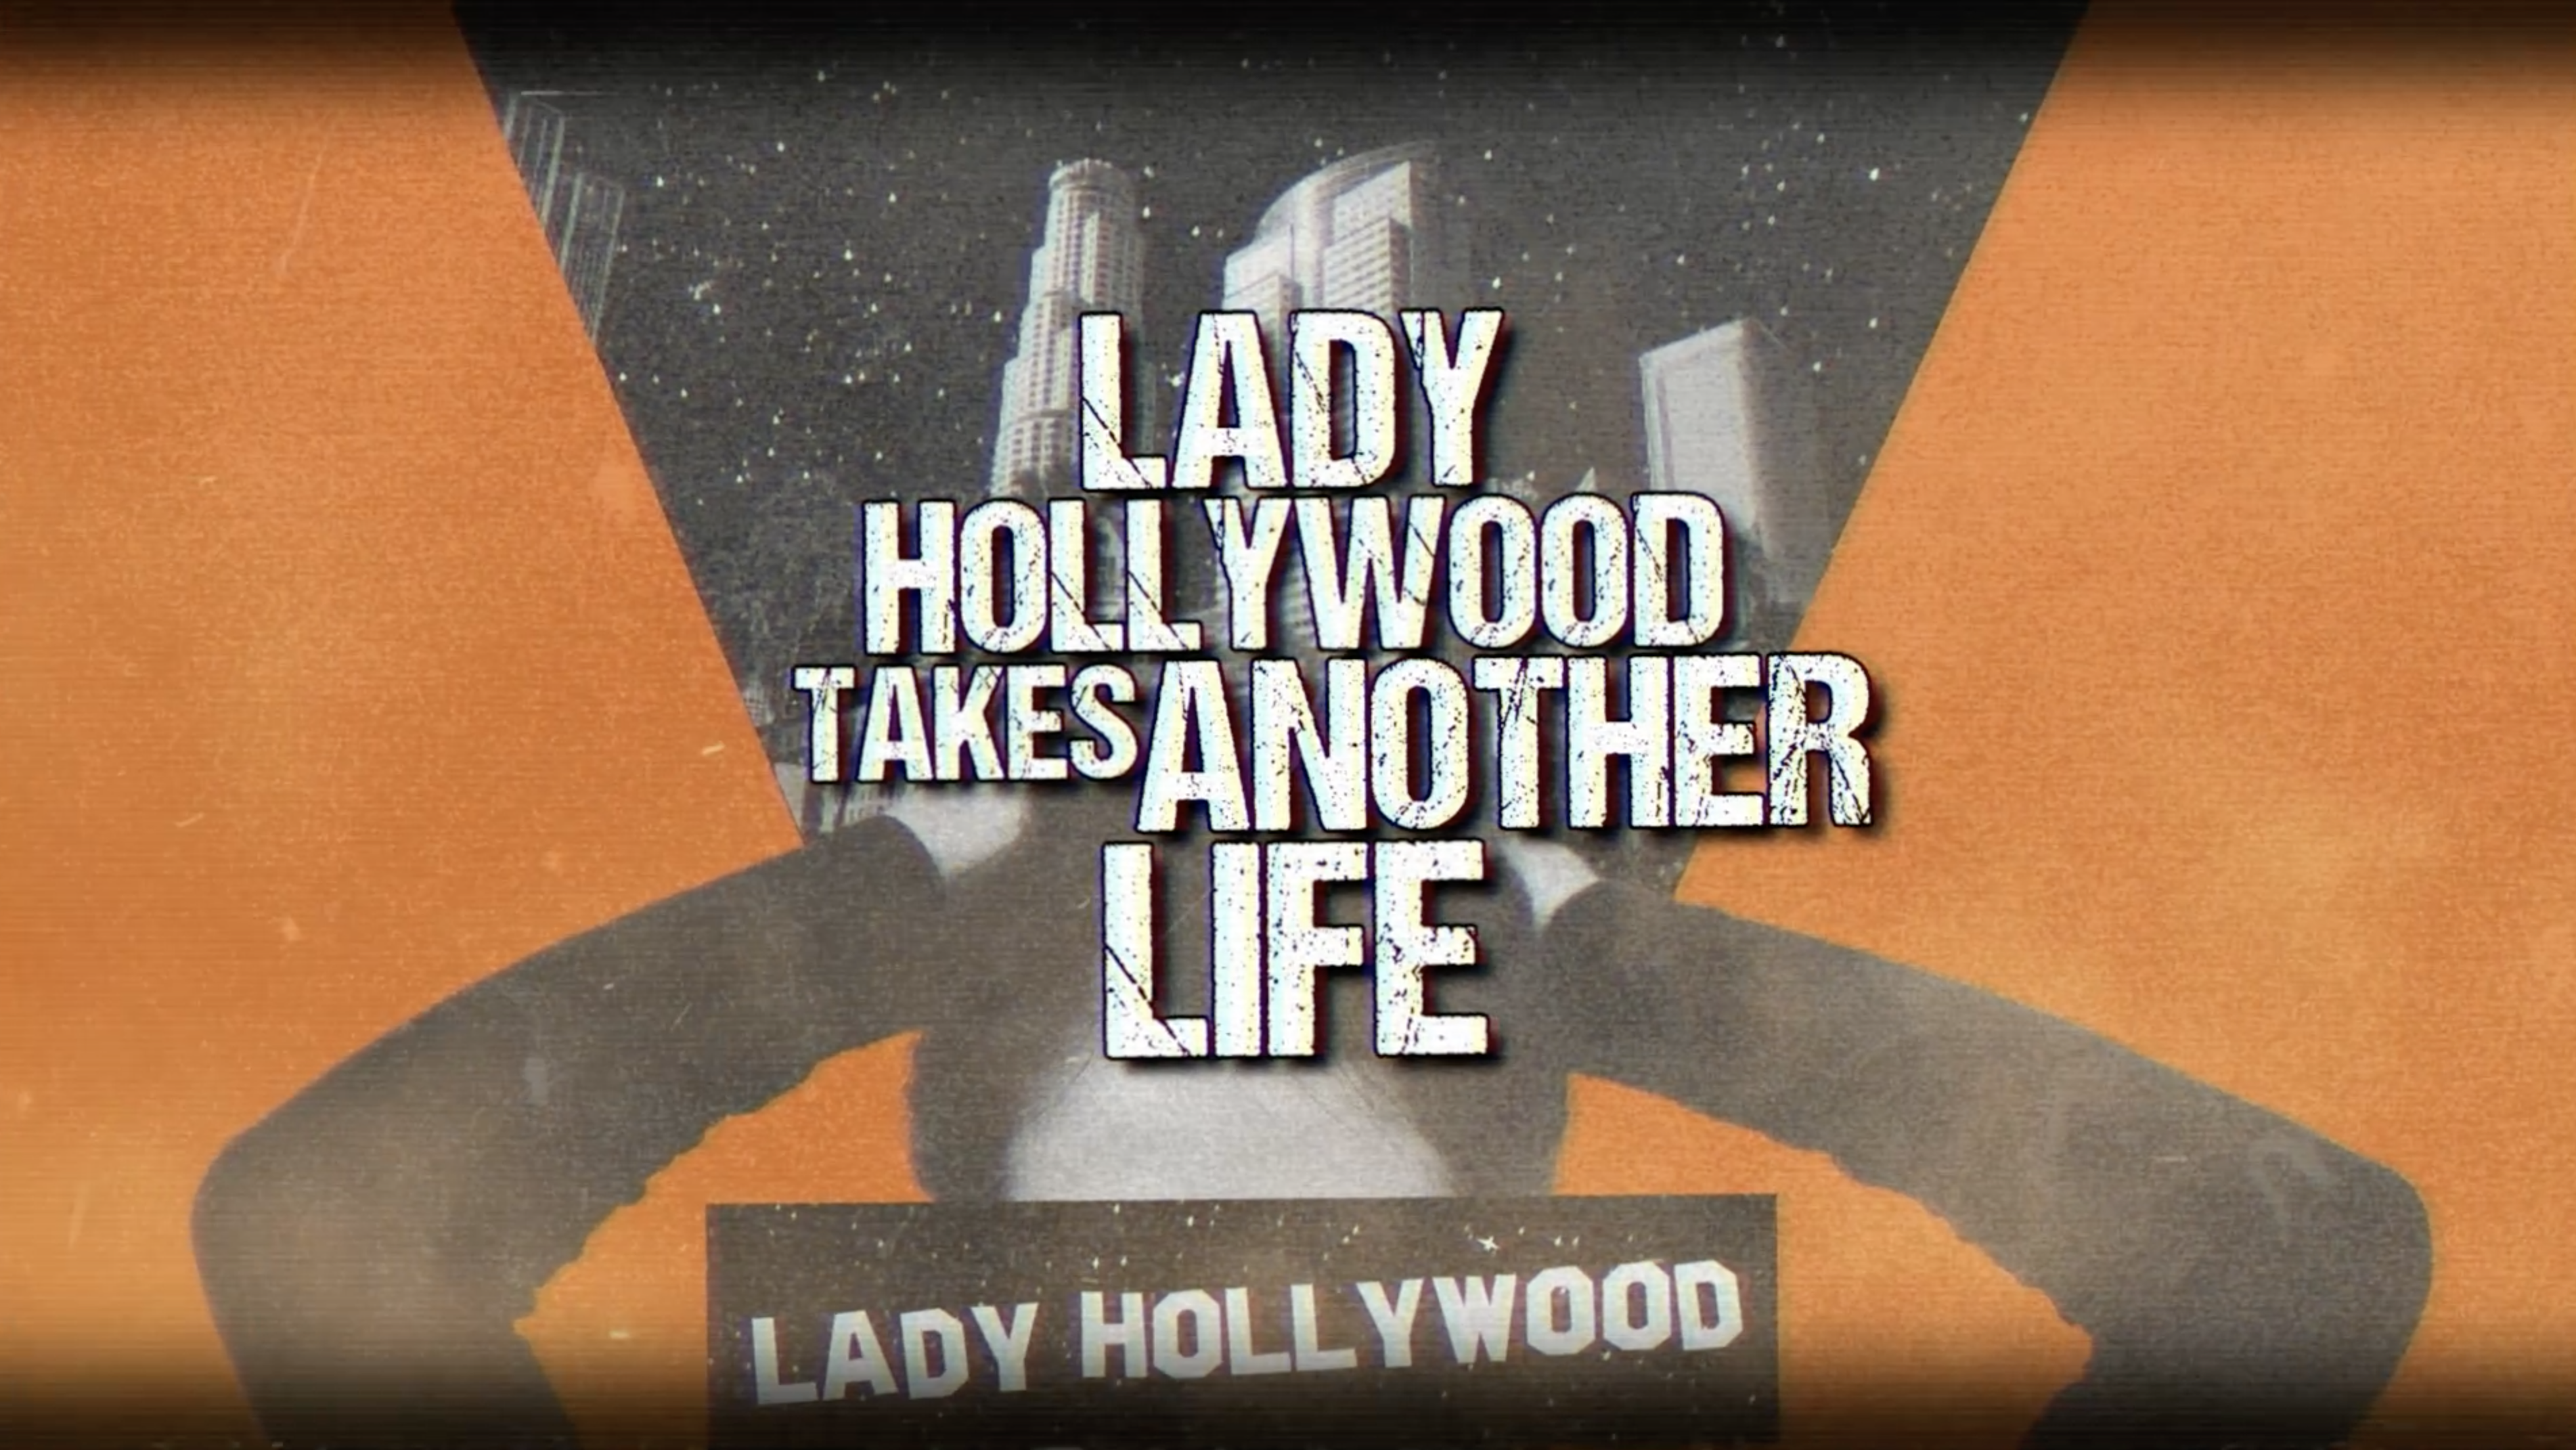 Lady Hollywood Lyric Video